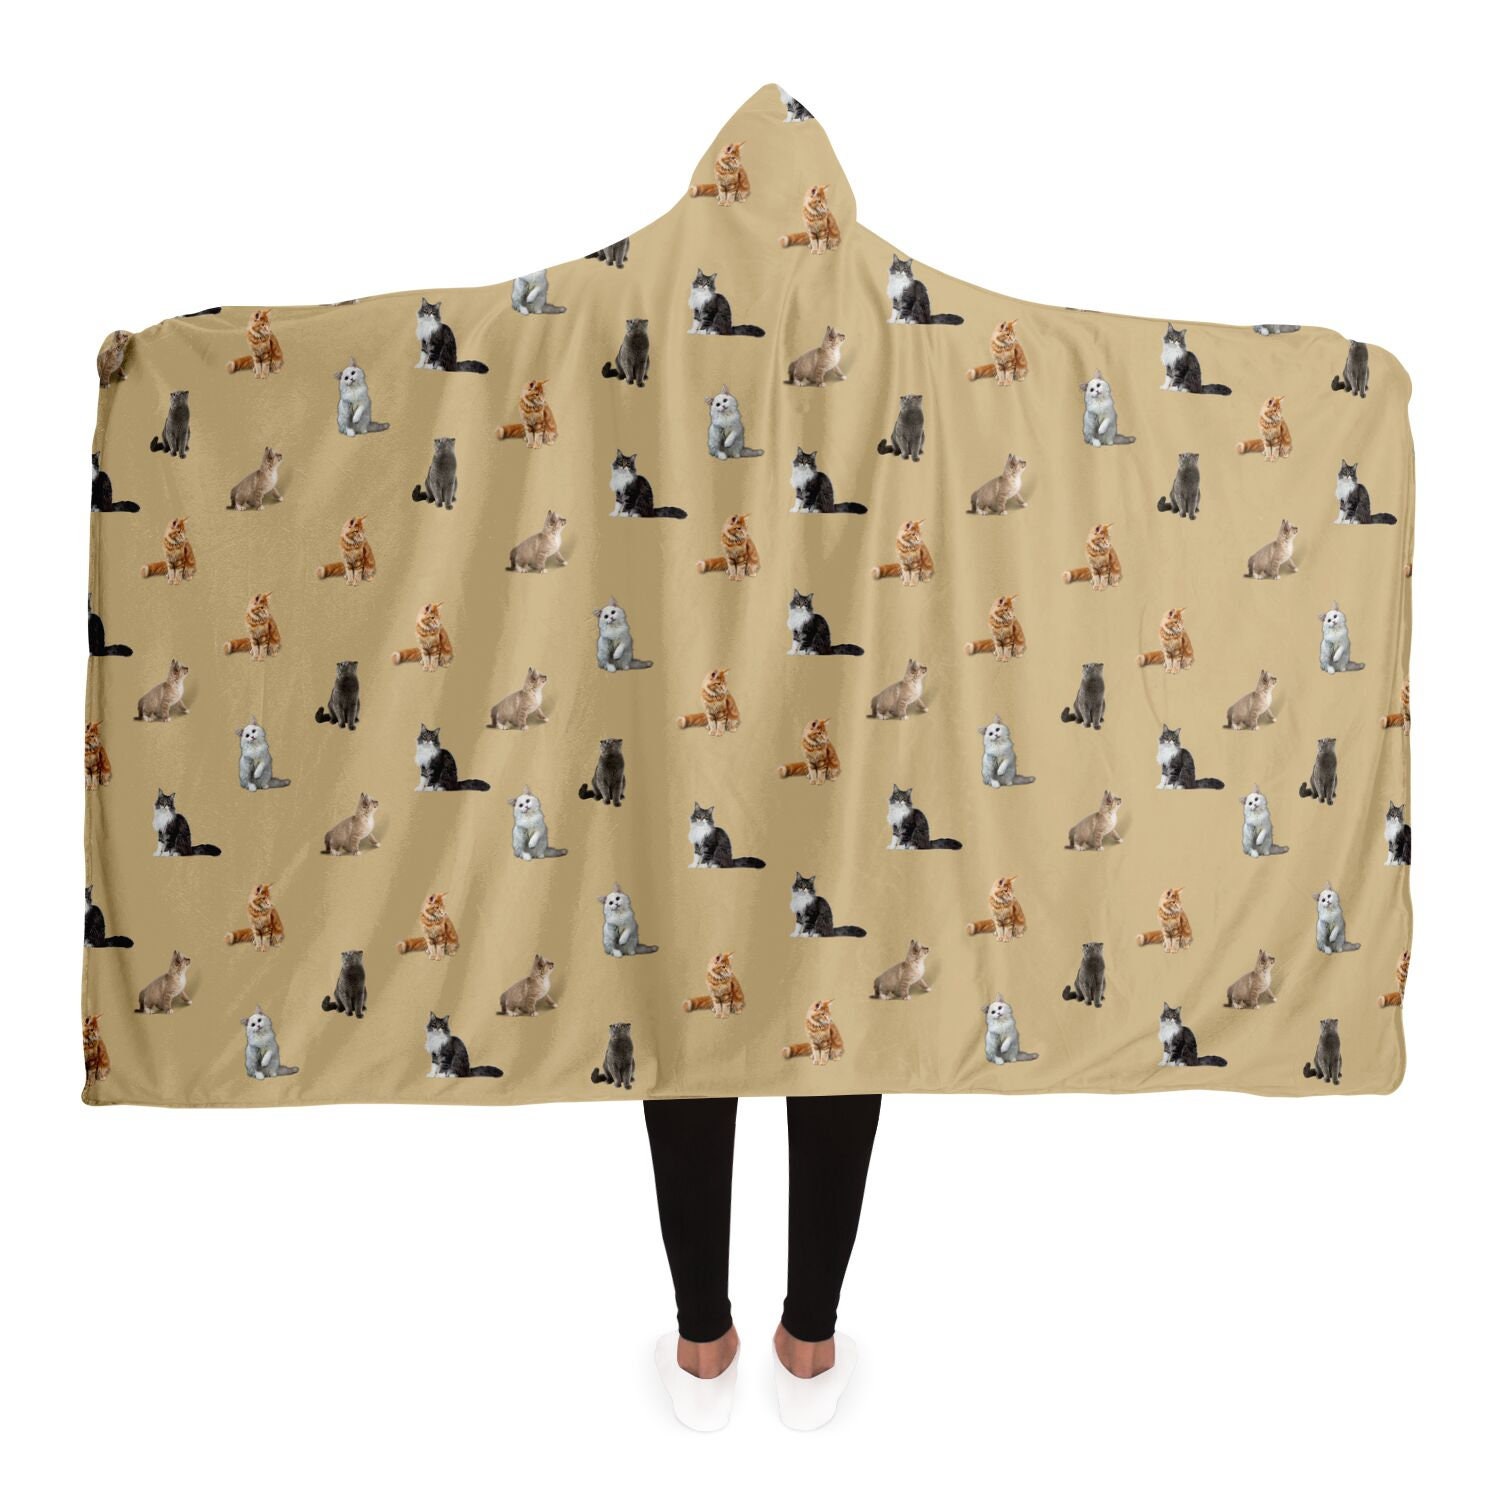 Discover 可愛い猫ちゃん フード付きブランケット 猫 動物 Cute Kawaii Cat Hooded Blanket